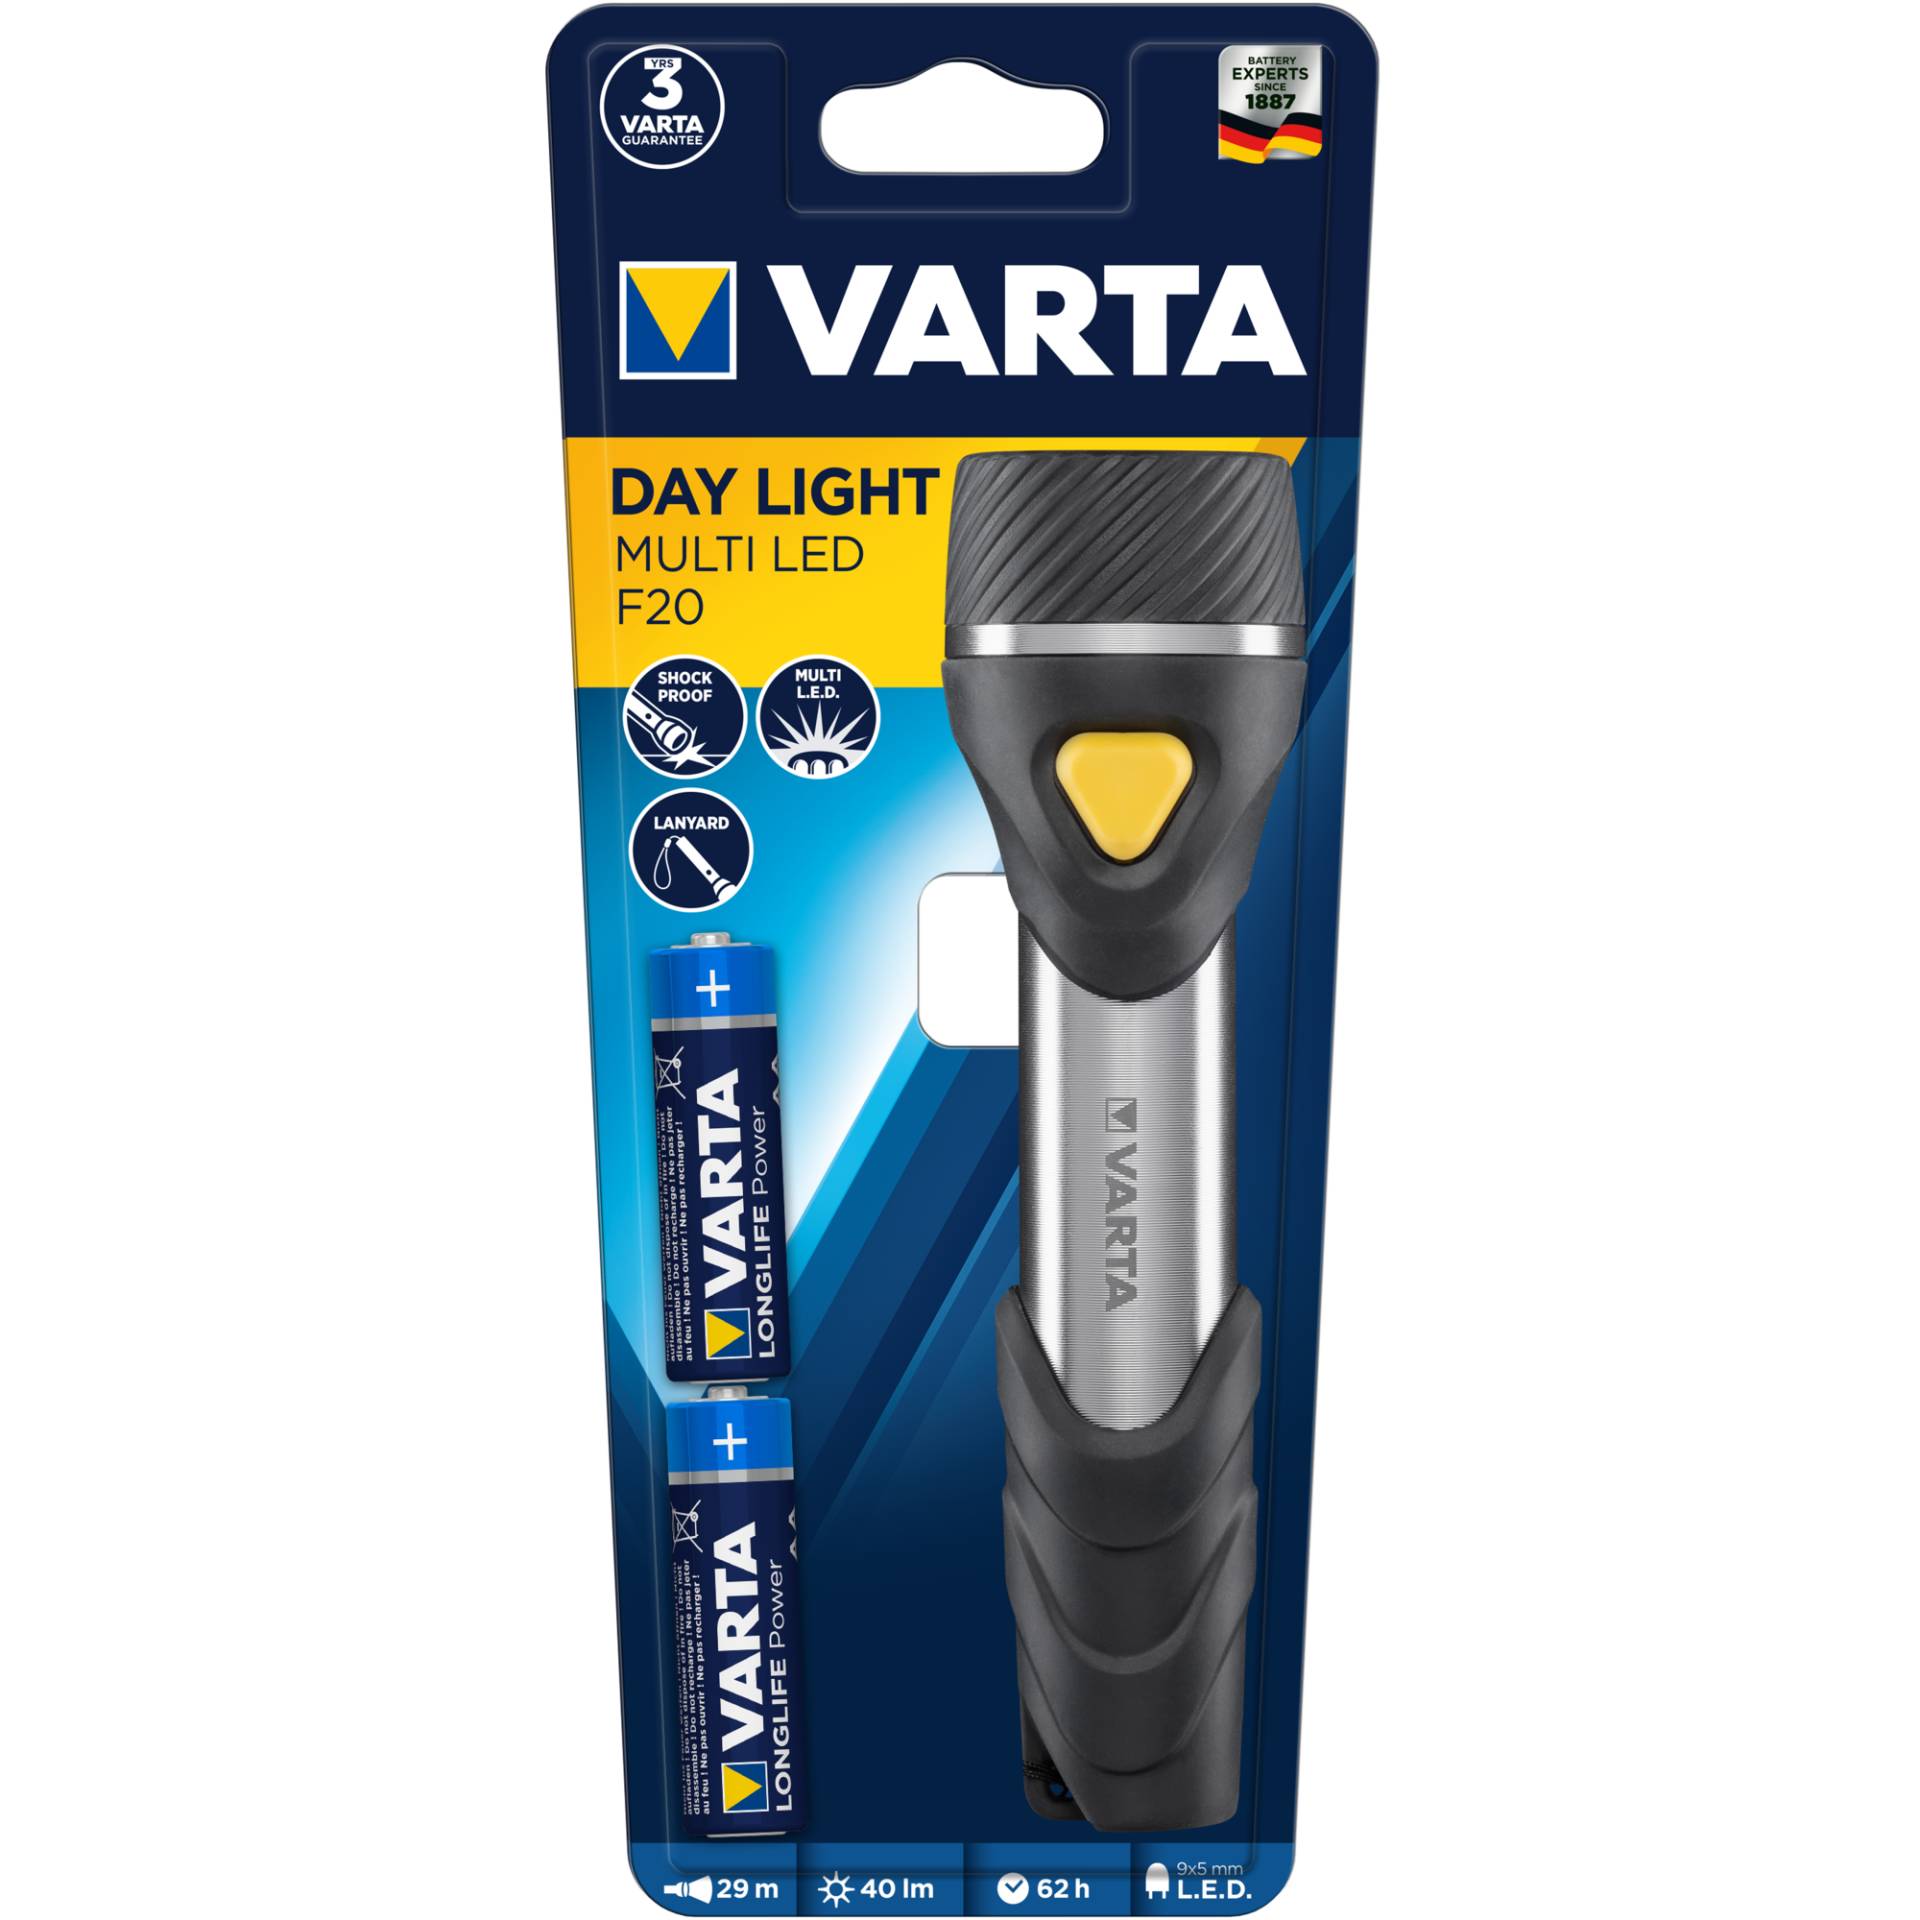 Varta Taschenlampe 'Day Light' Multi-LED 40 lm von Varta